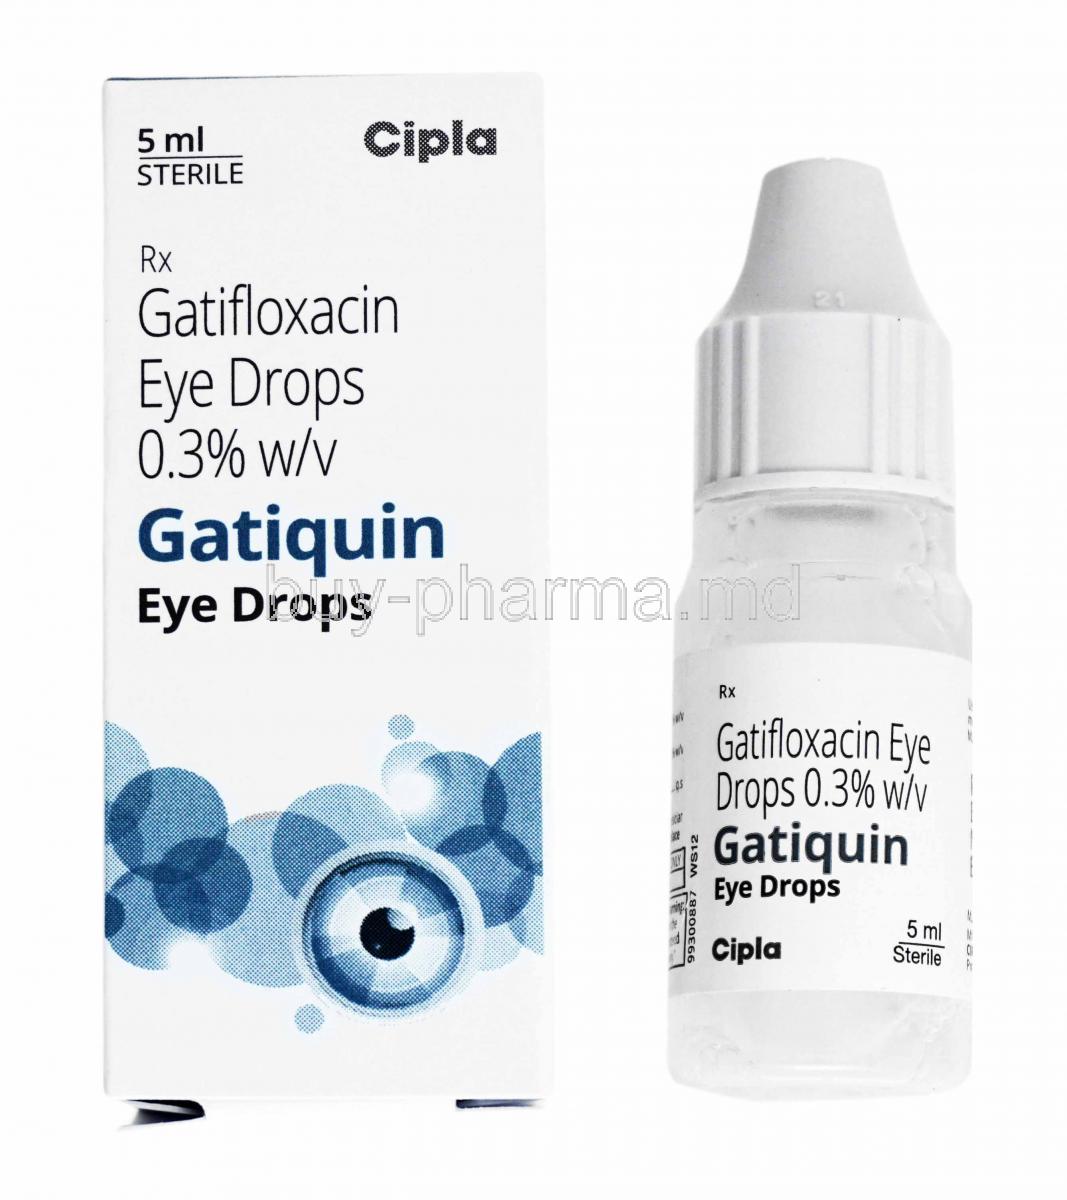 Gatiquin Eye Drop, Gatifloxacin box and bottle